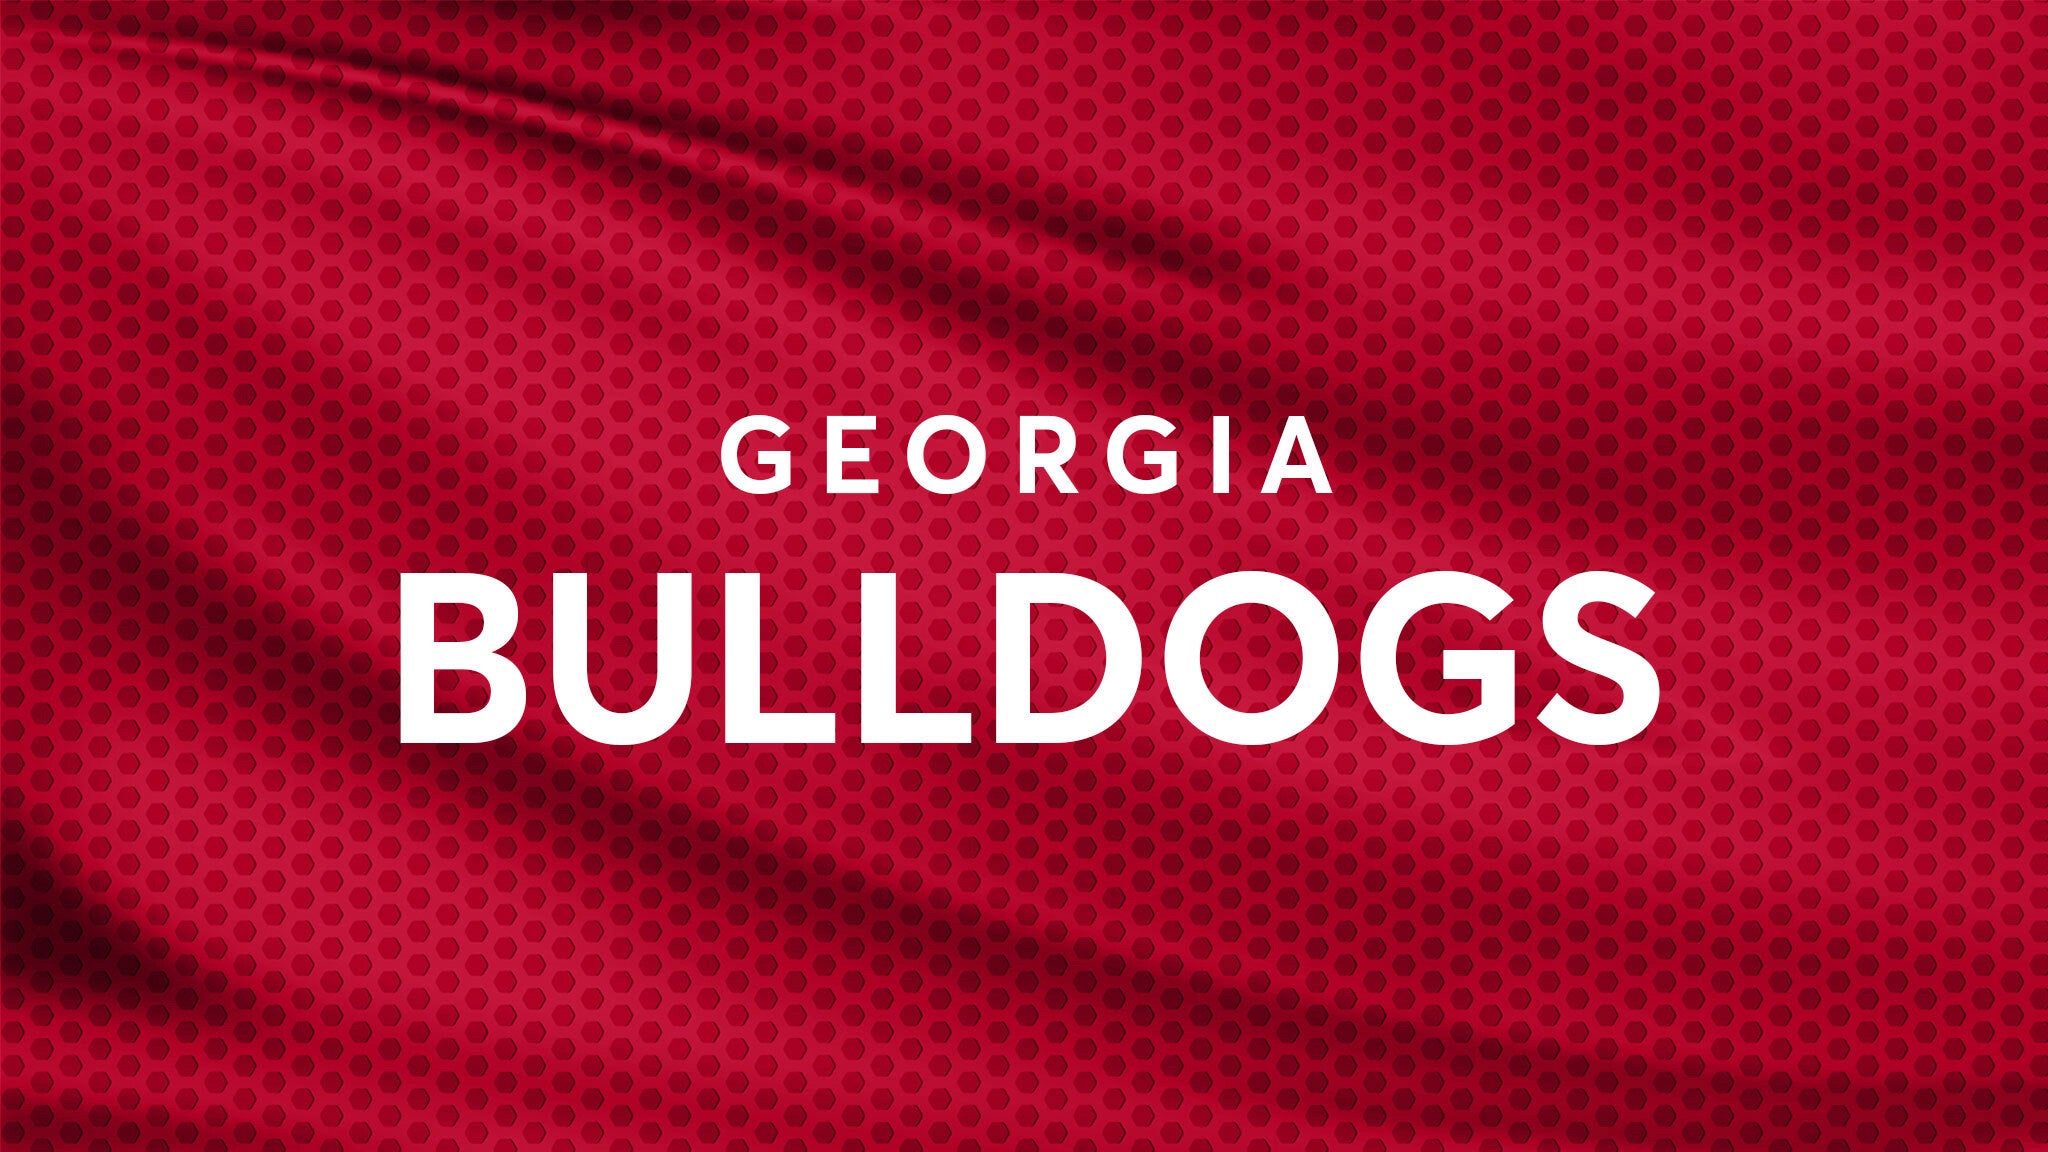 Georgia Bulldogs Baseball vs. Florida Gators Baseball